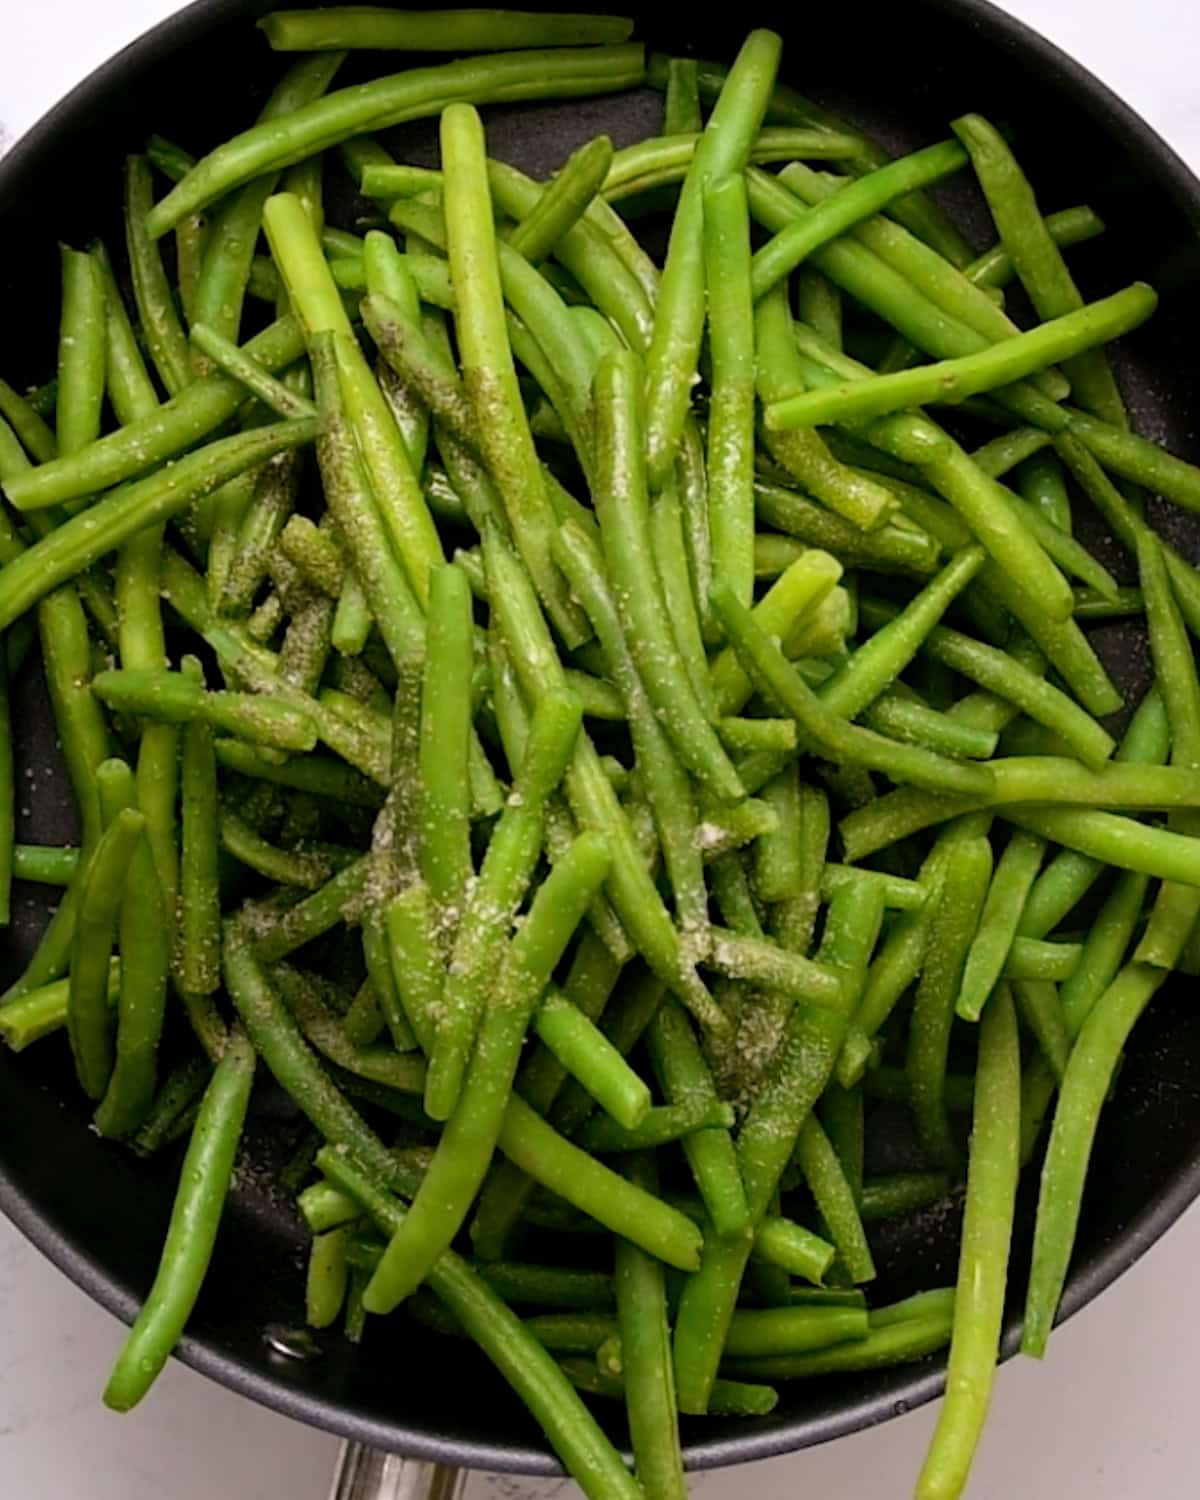 How to Make Sautéed Green Beans adding garlic powder, salt and pepper